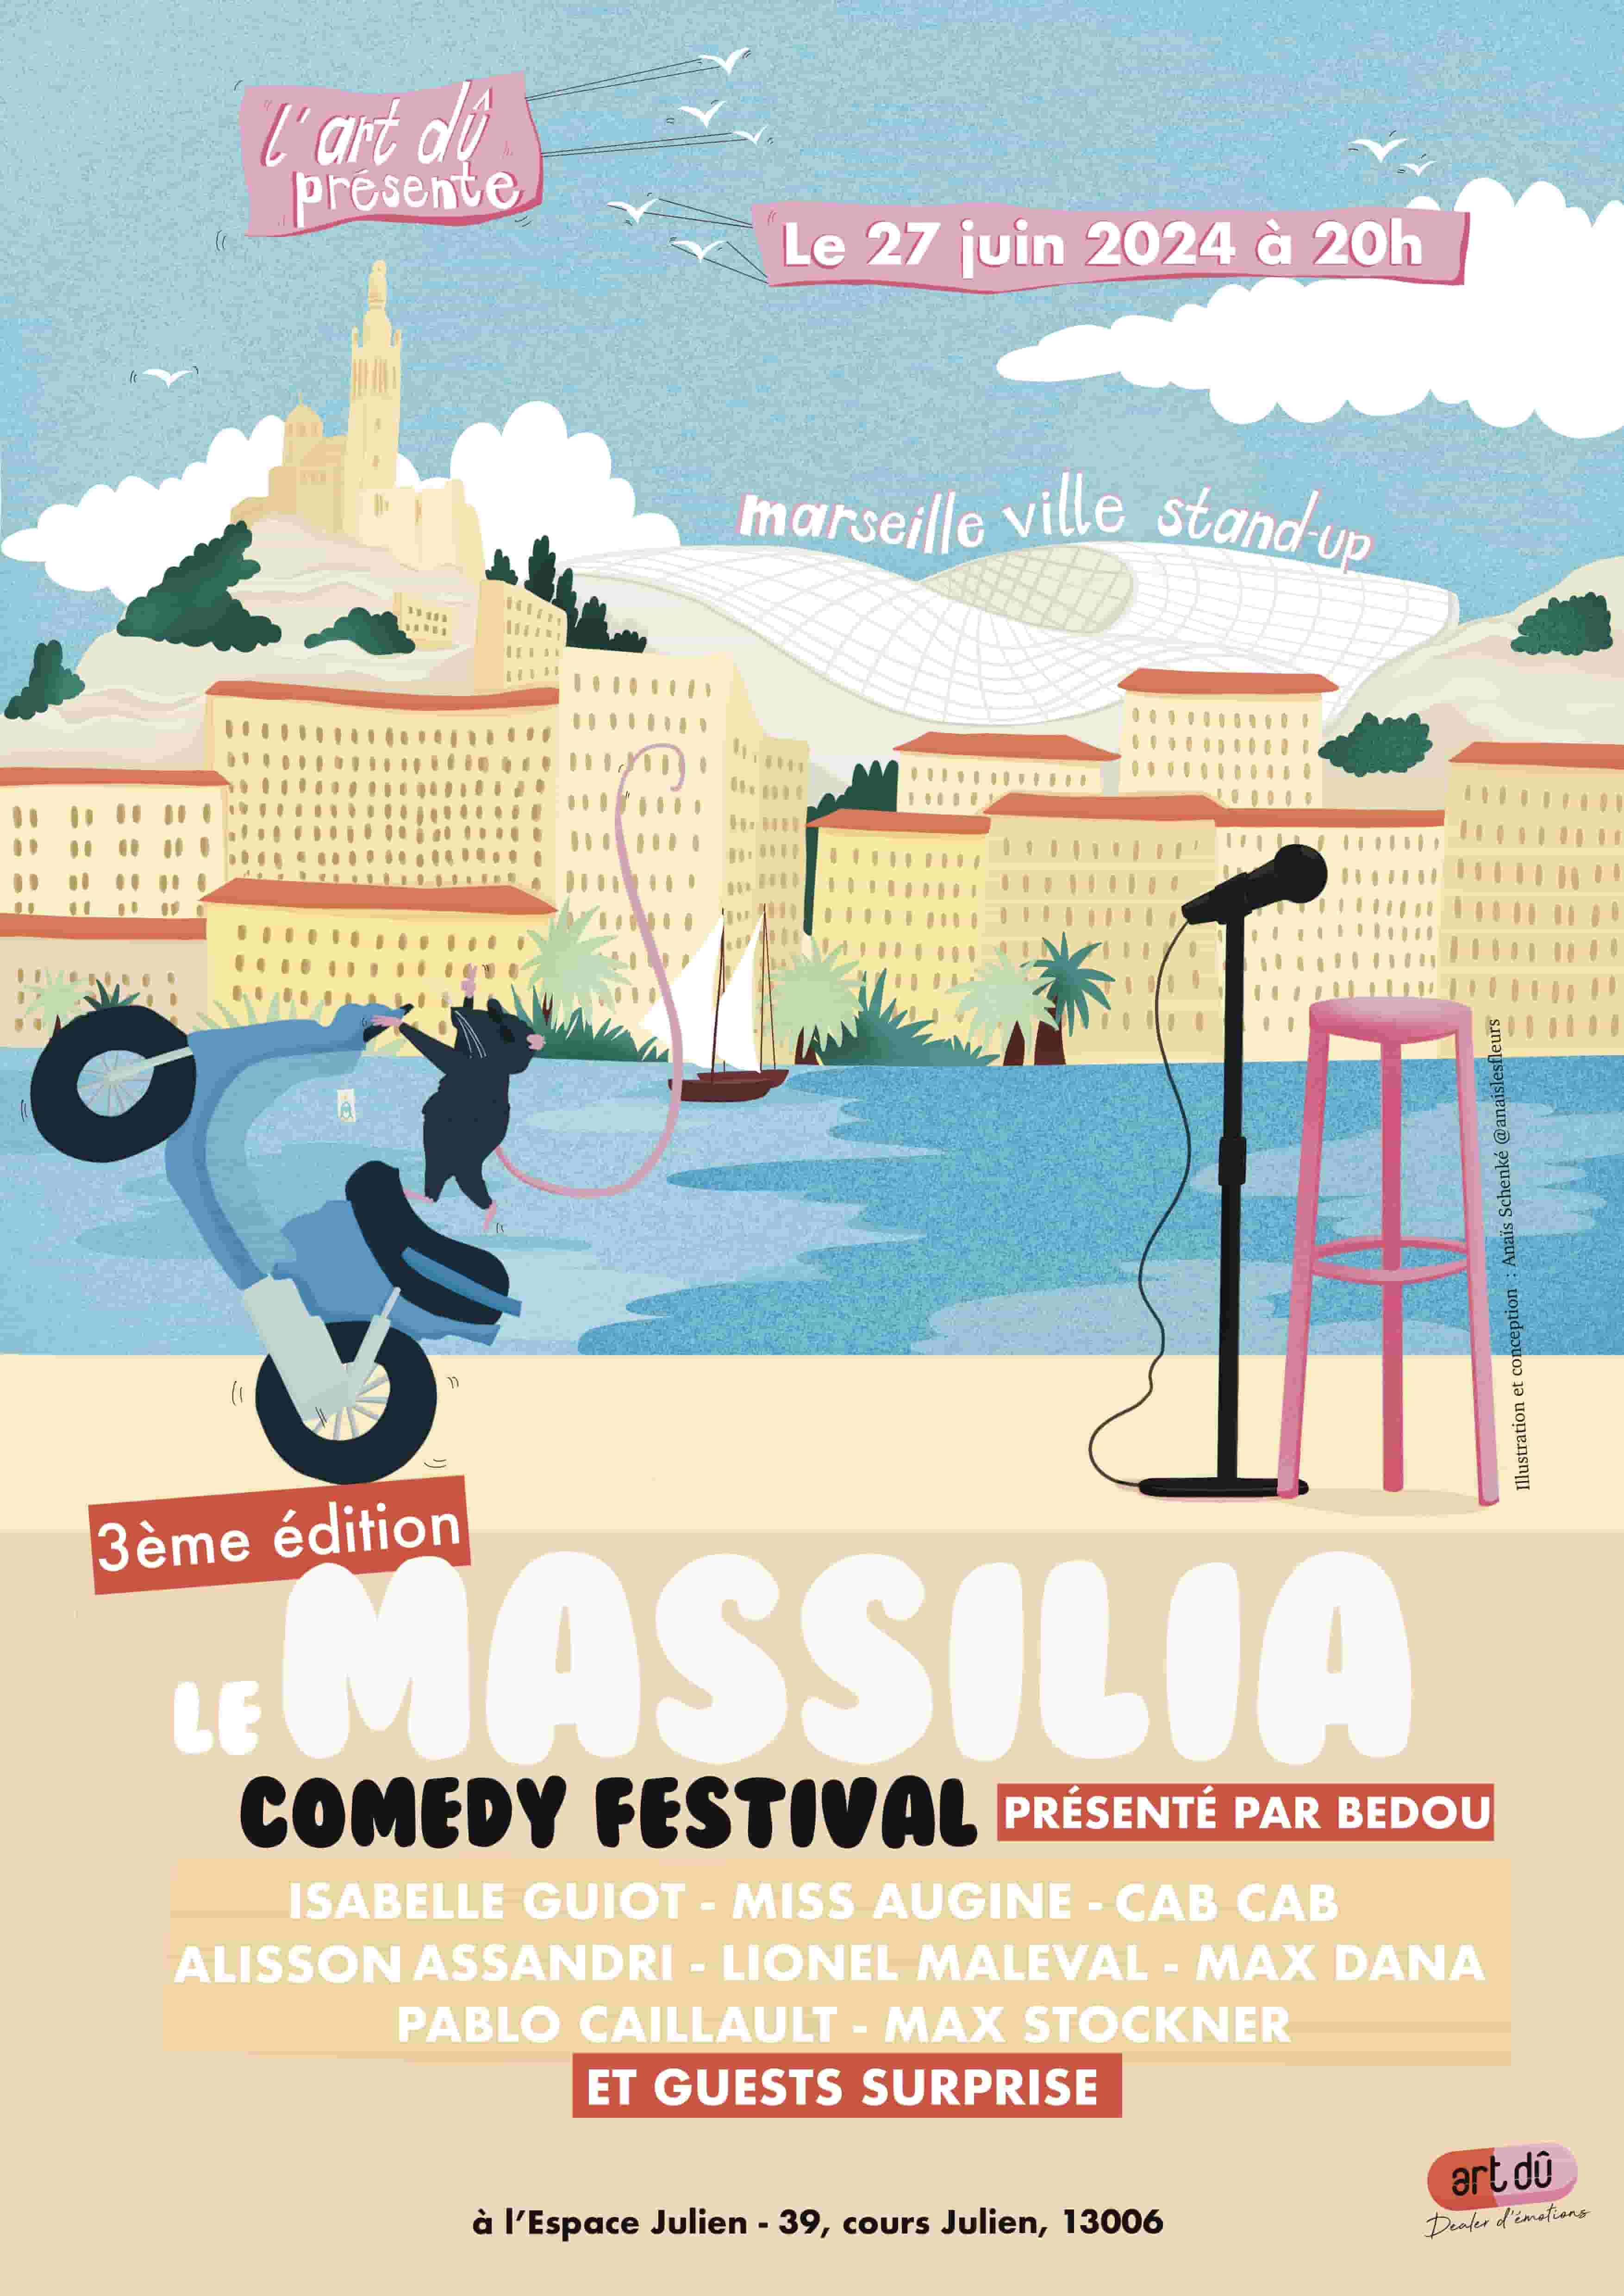 Massilia Comedy Festival-comedyclub-humour-marseille-espacejulien-l'artdû